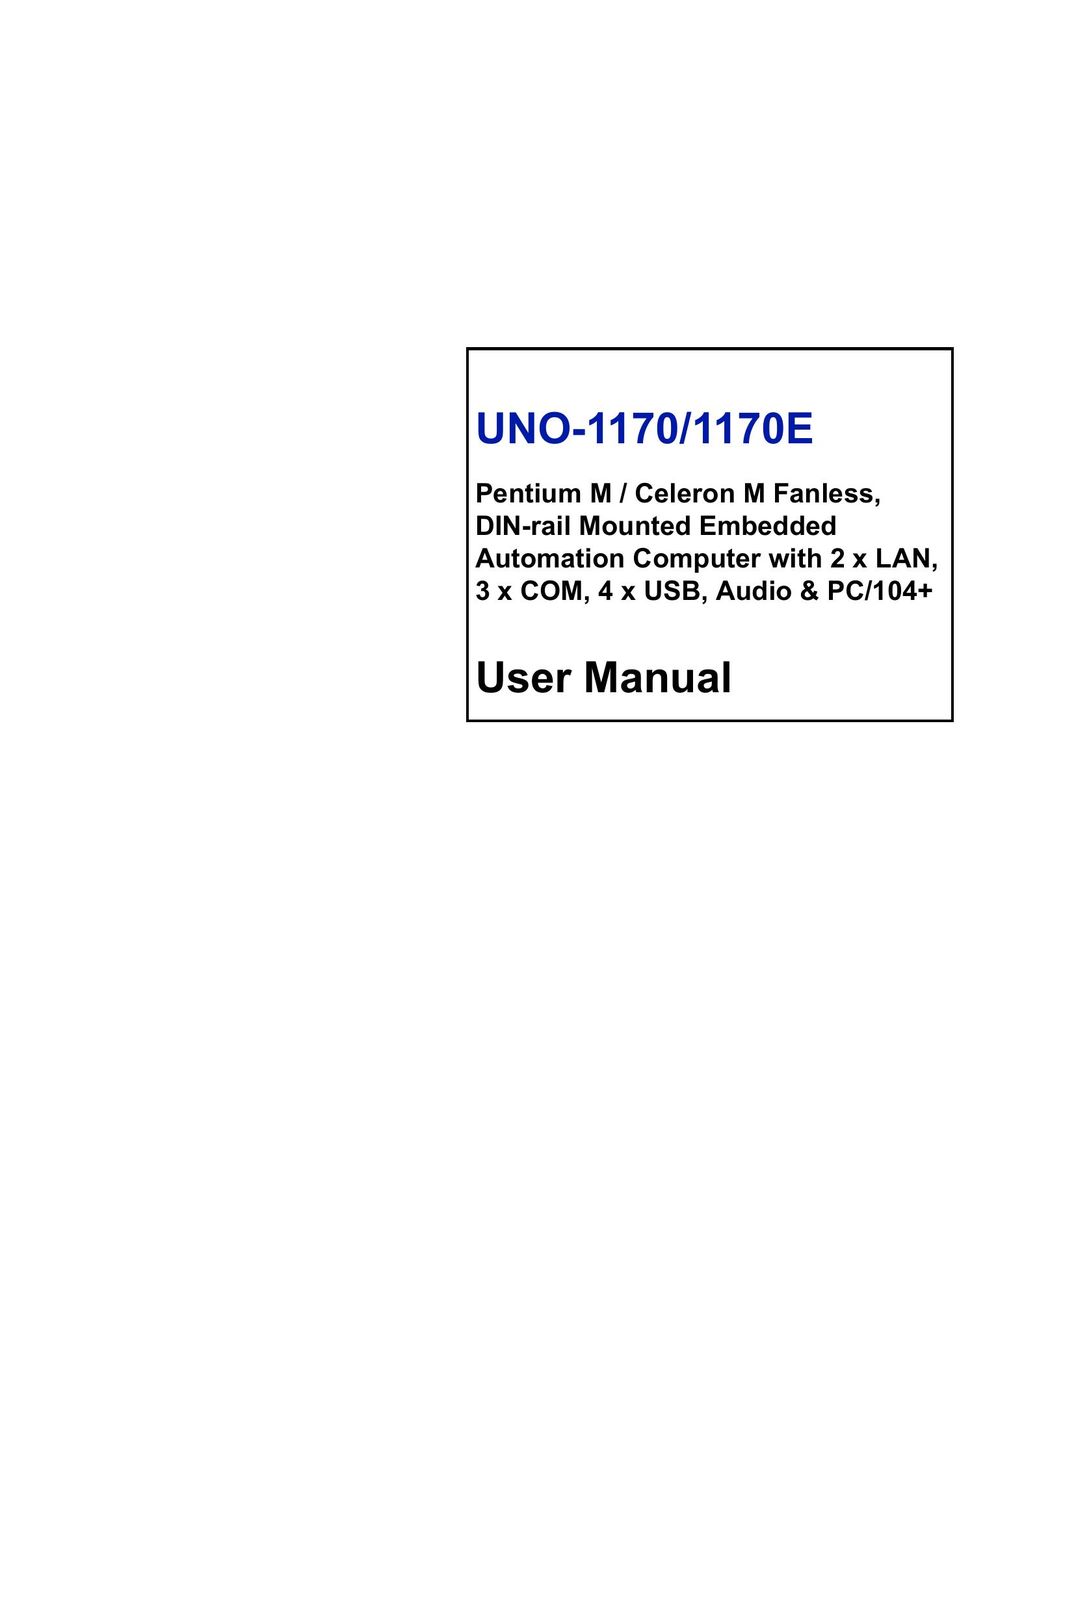 Advantech UNO-1170 Personal Computer User Manual